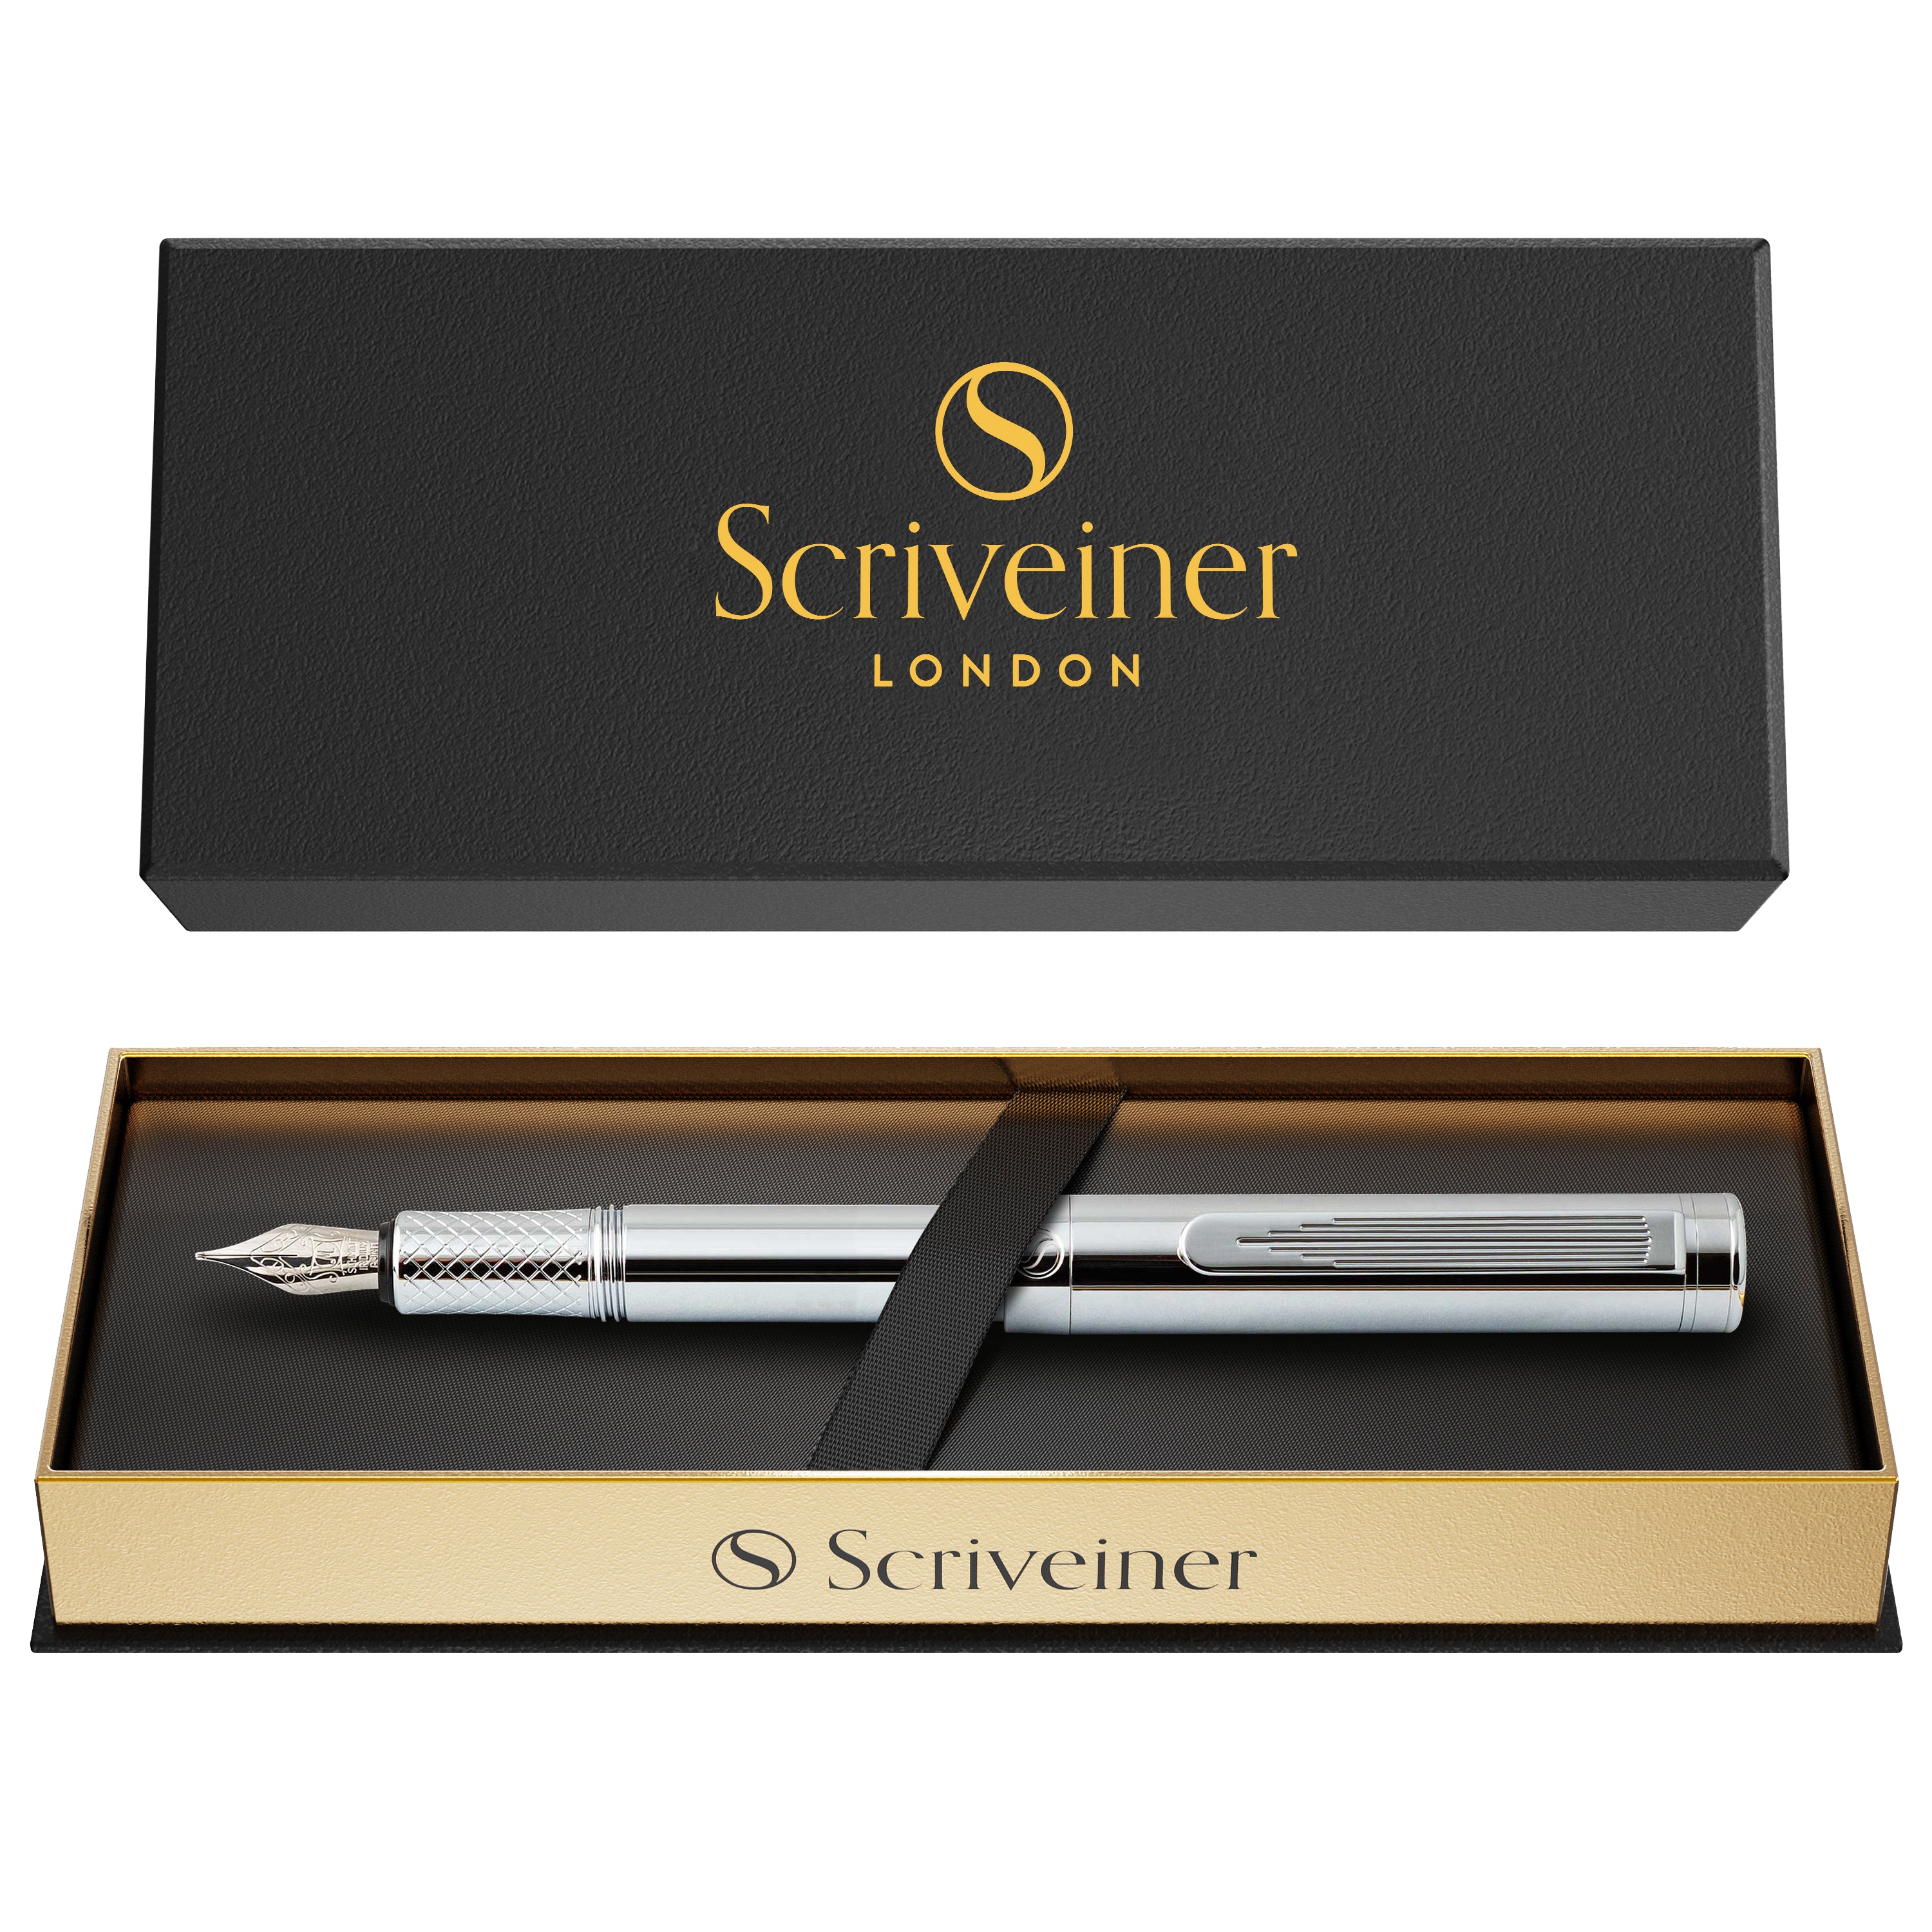 Scriveiner Silver Chrome Fountain Pen (Medium), Award Winning Luxury Pen, Heavy Pocket Pen, Chrome Finish